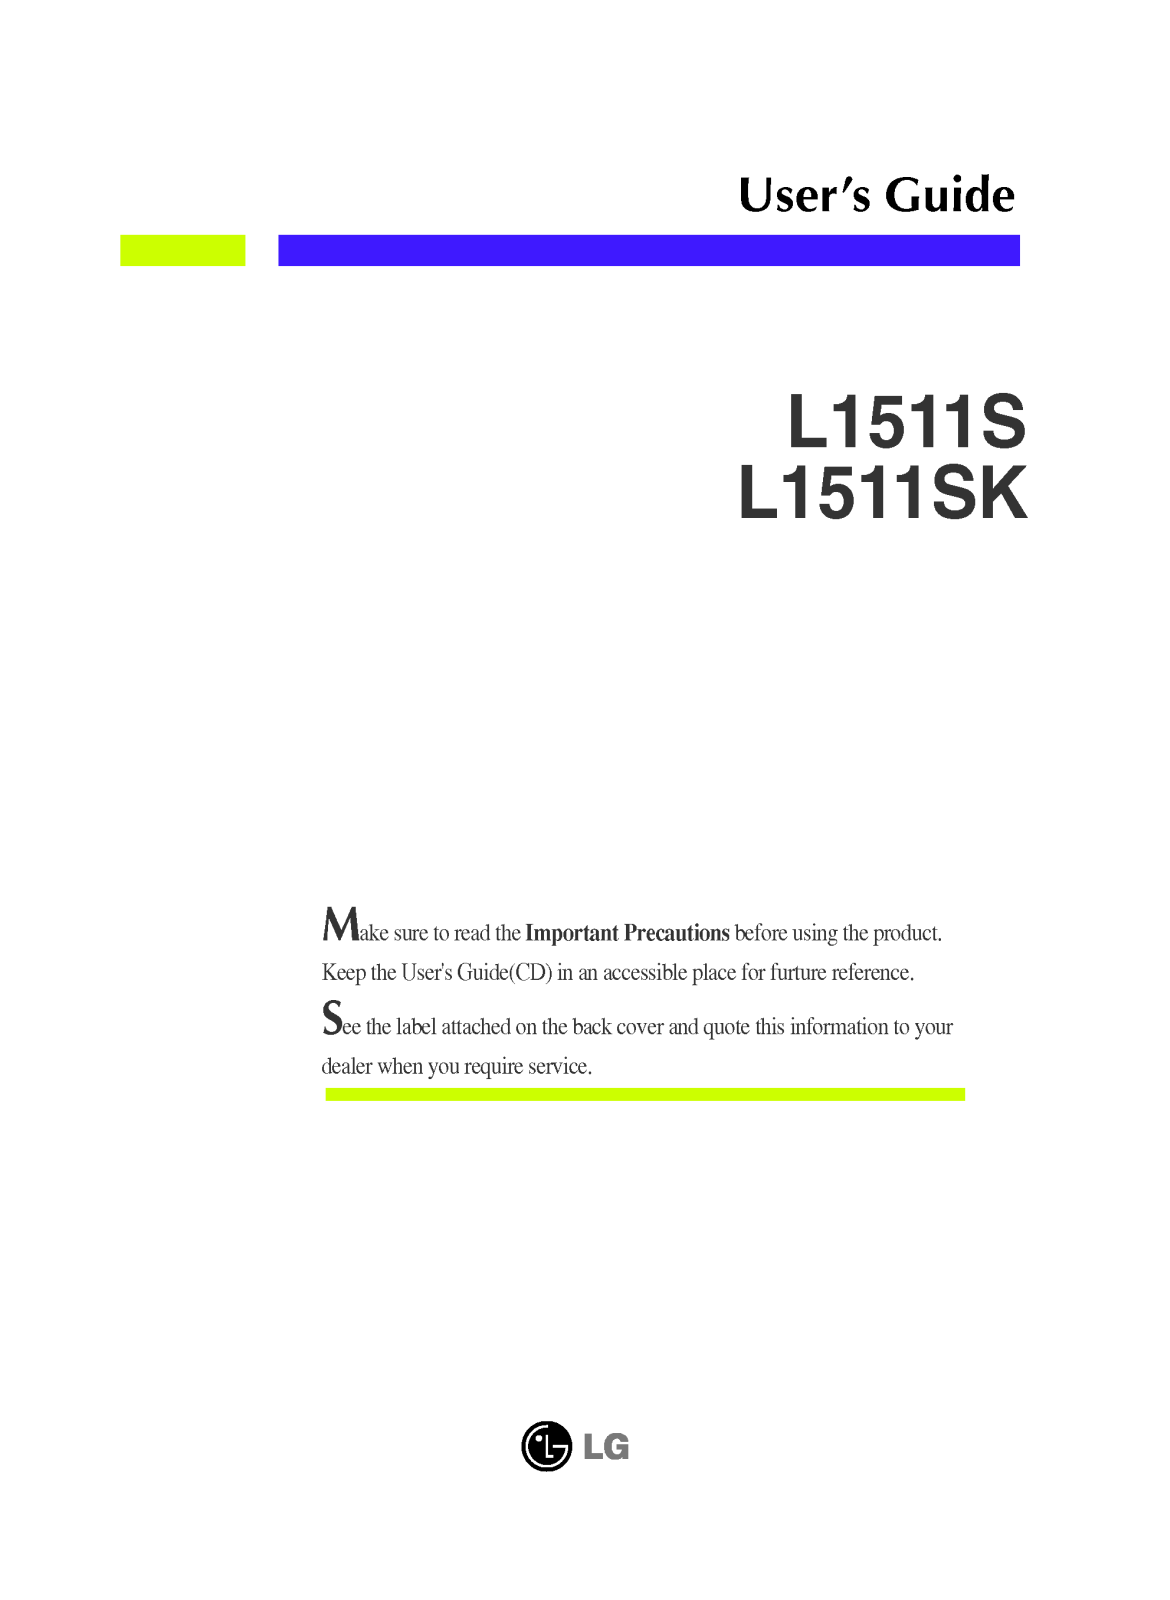 LG L1511SK, L1511S User Manual